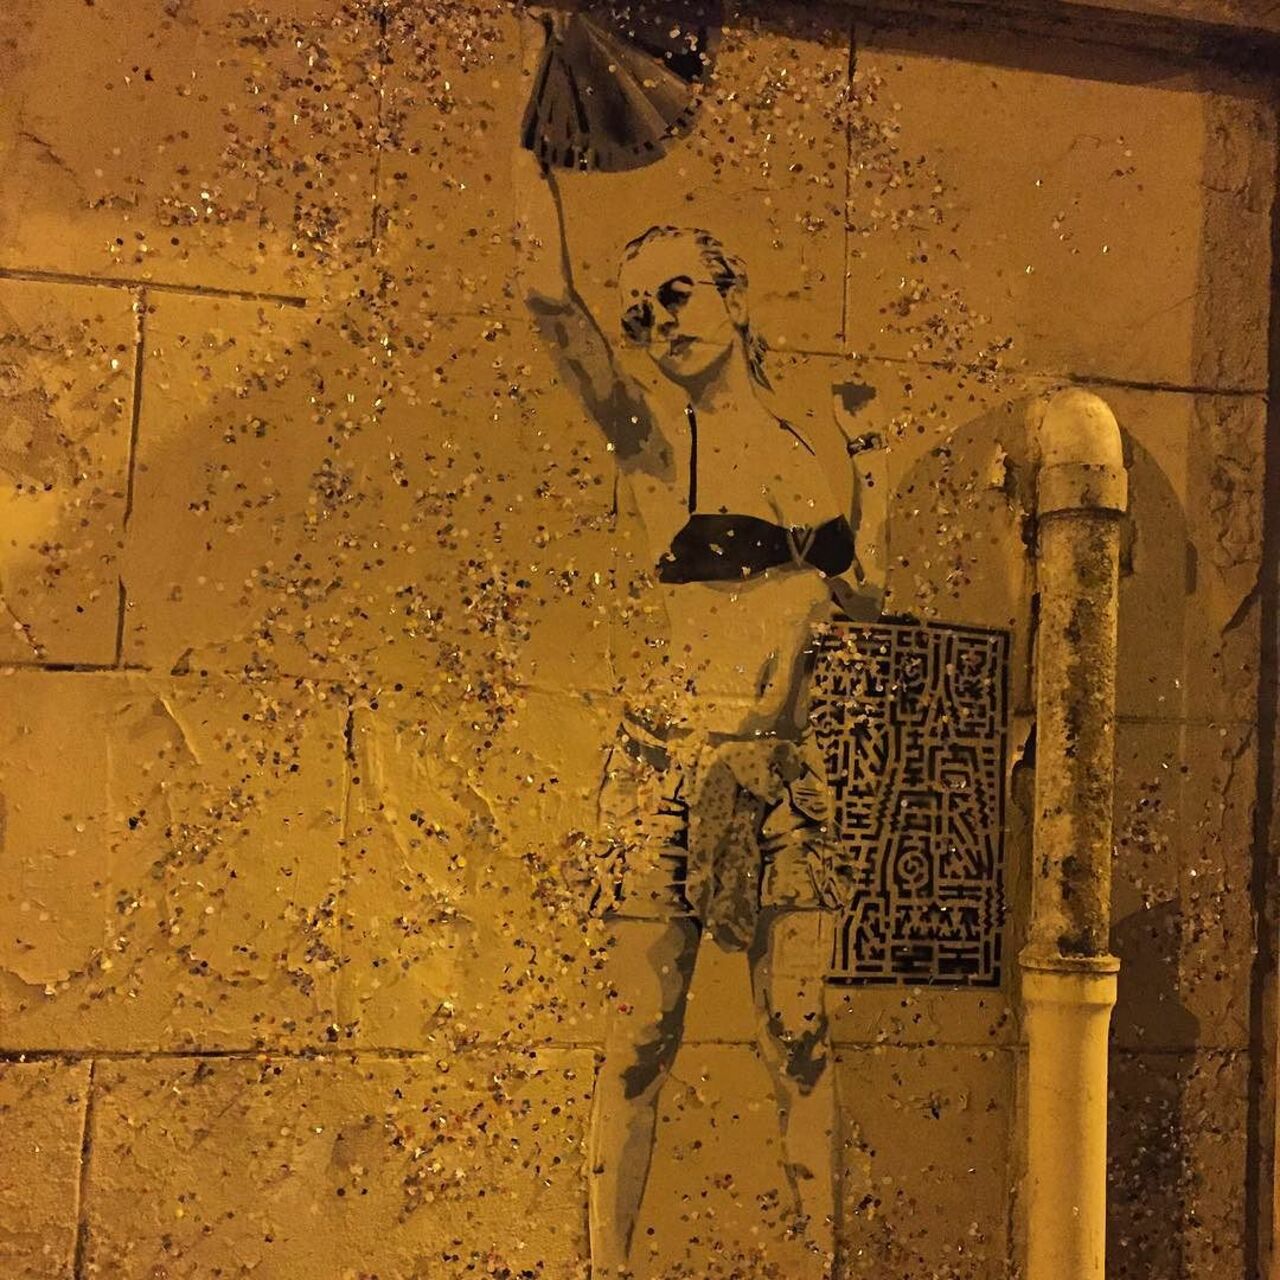 #Paris #graffiti photo by @dede_nesbitt http://ift.tt/1O3DrWo #StreetArt https://t.co/Wb8FR51391